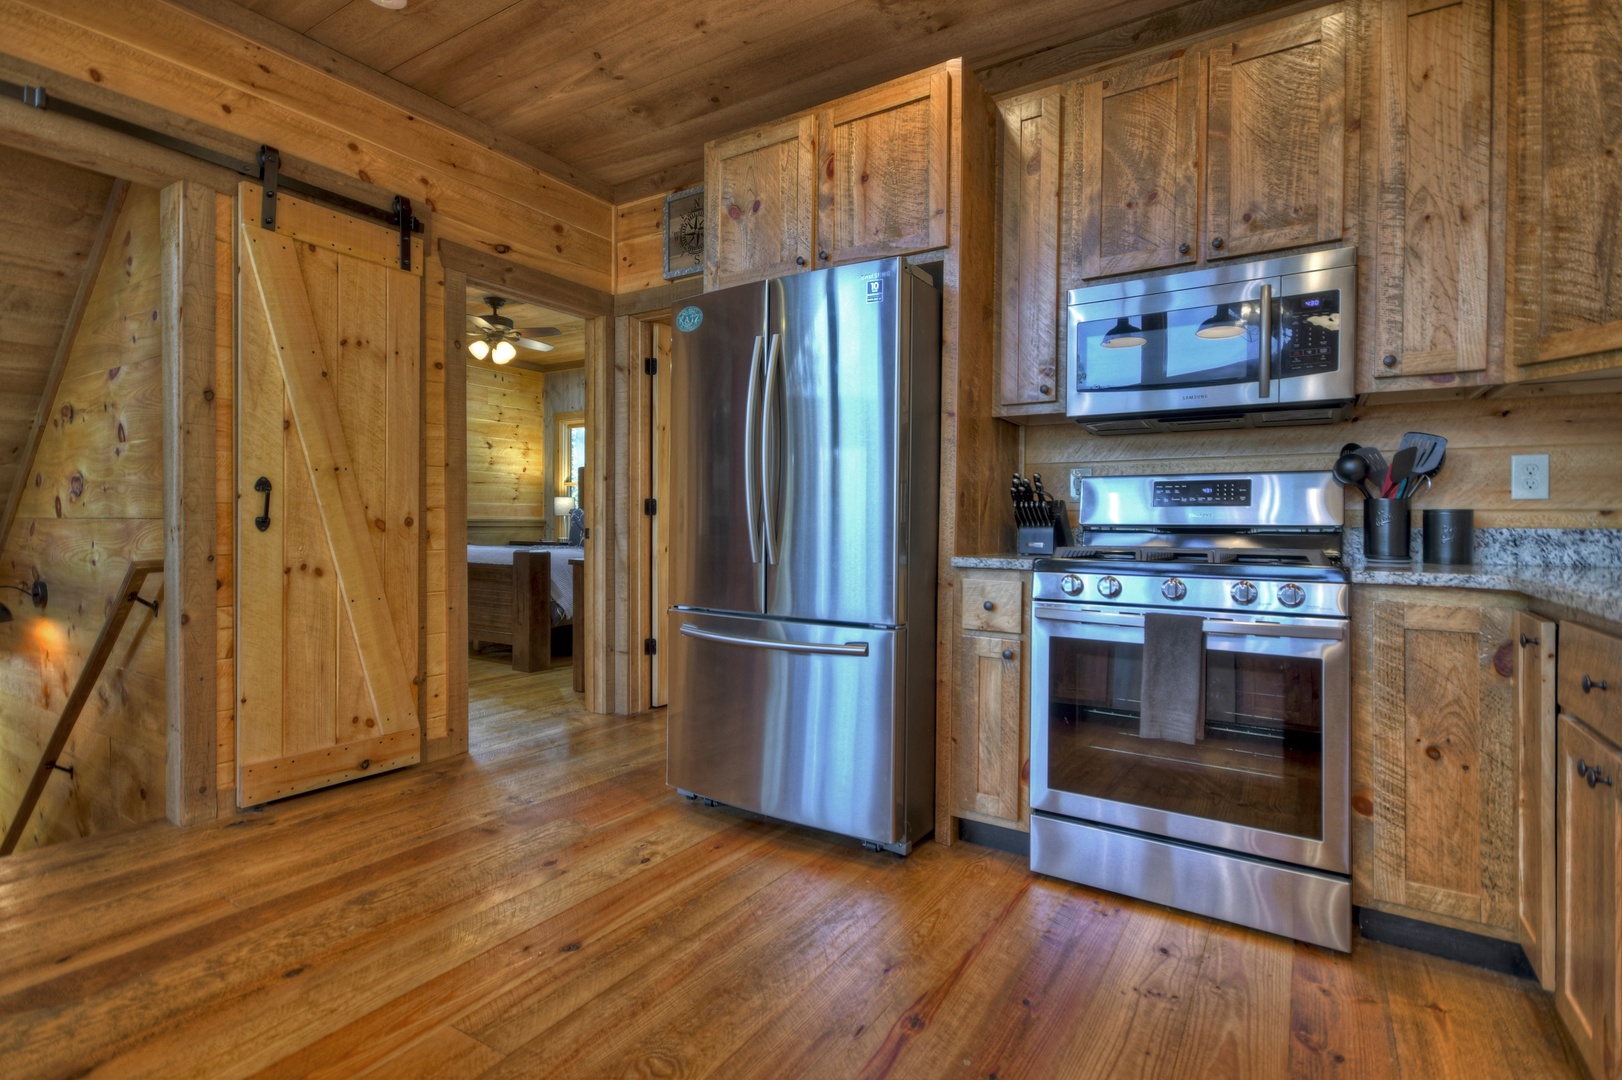 Cedar Ridge- Entry level kitchen area featuring the appliances